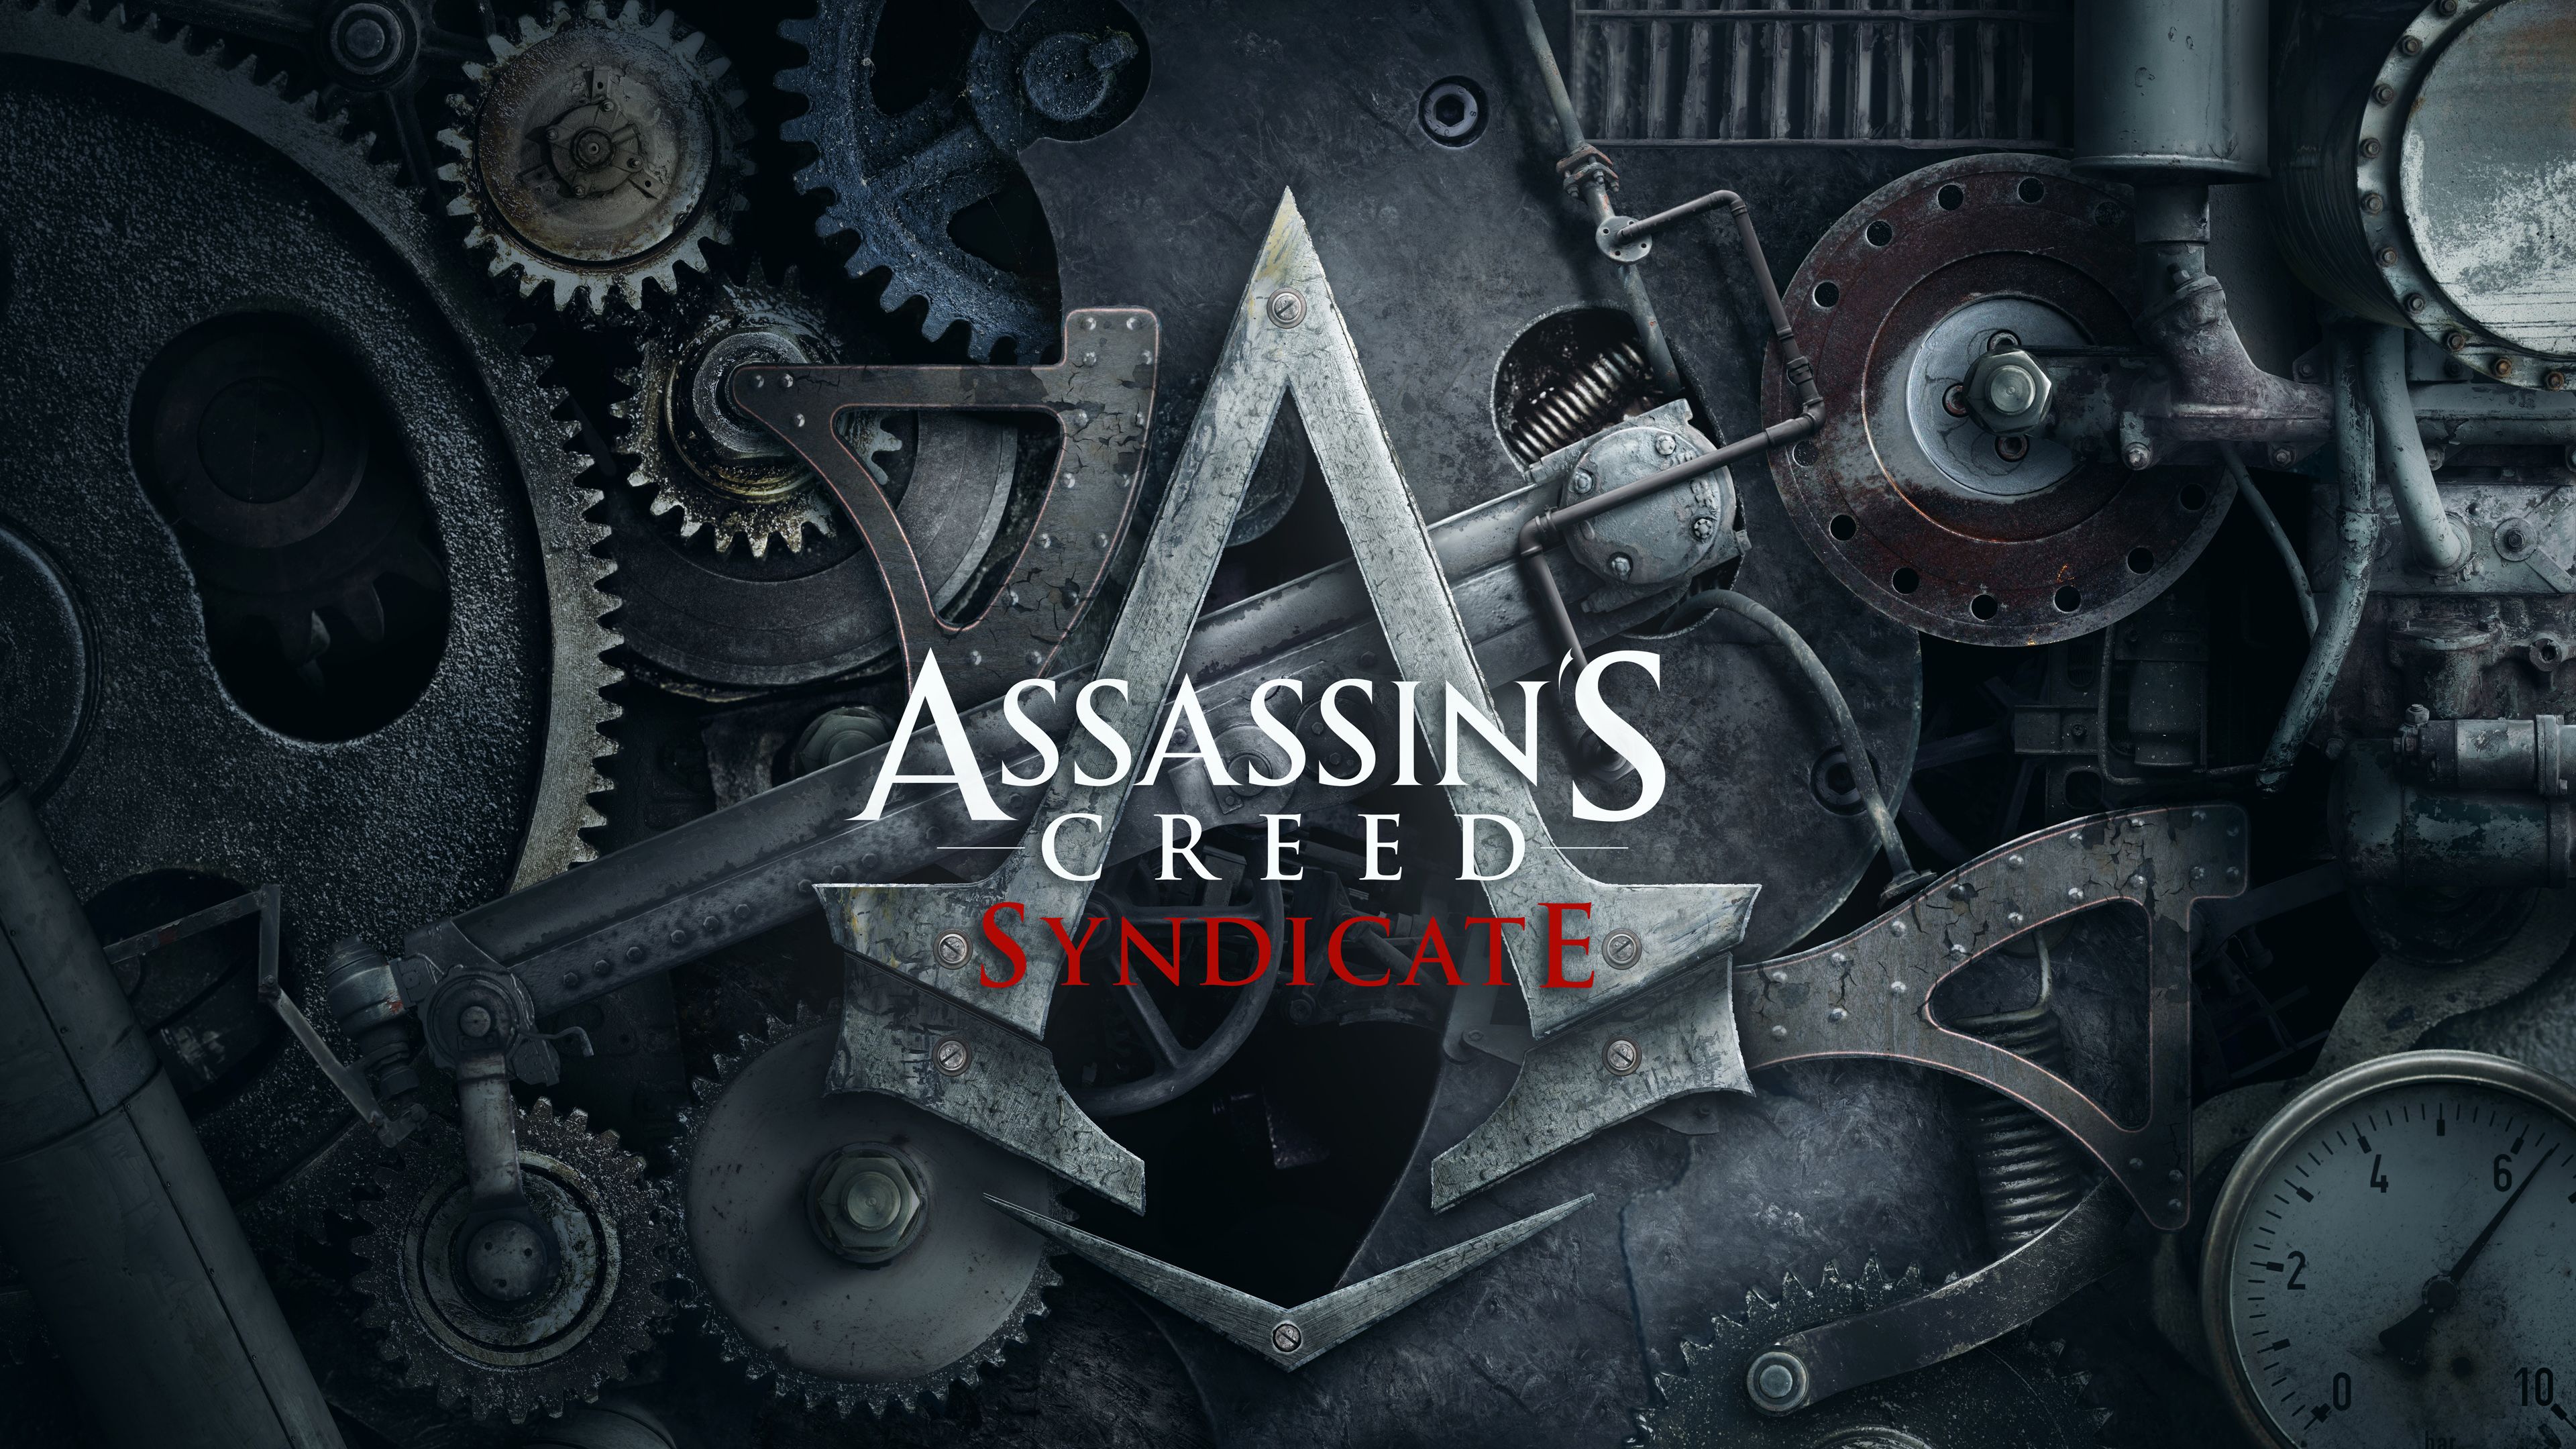 Assassins Creed Syndicate Logo, HD Games, 4k Wallpaper, Image